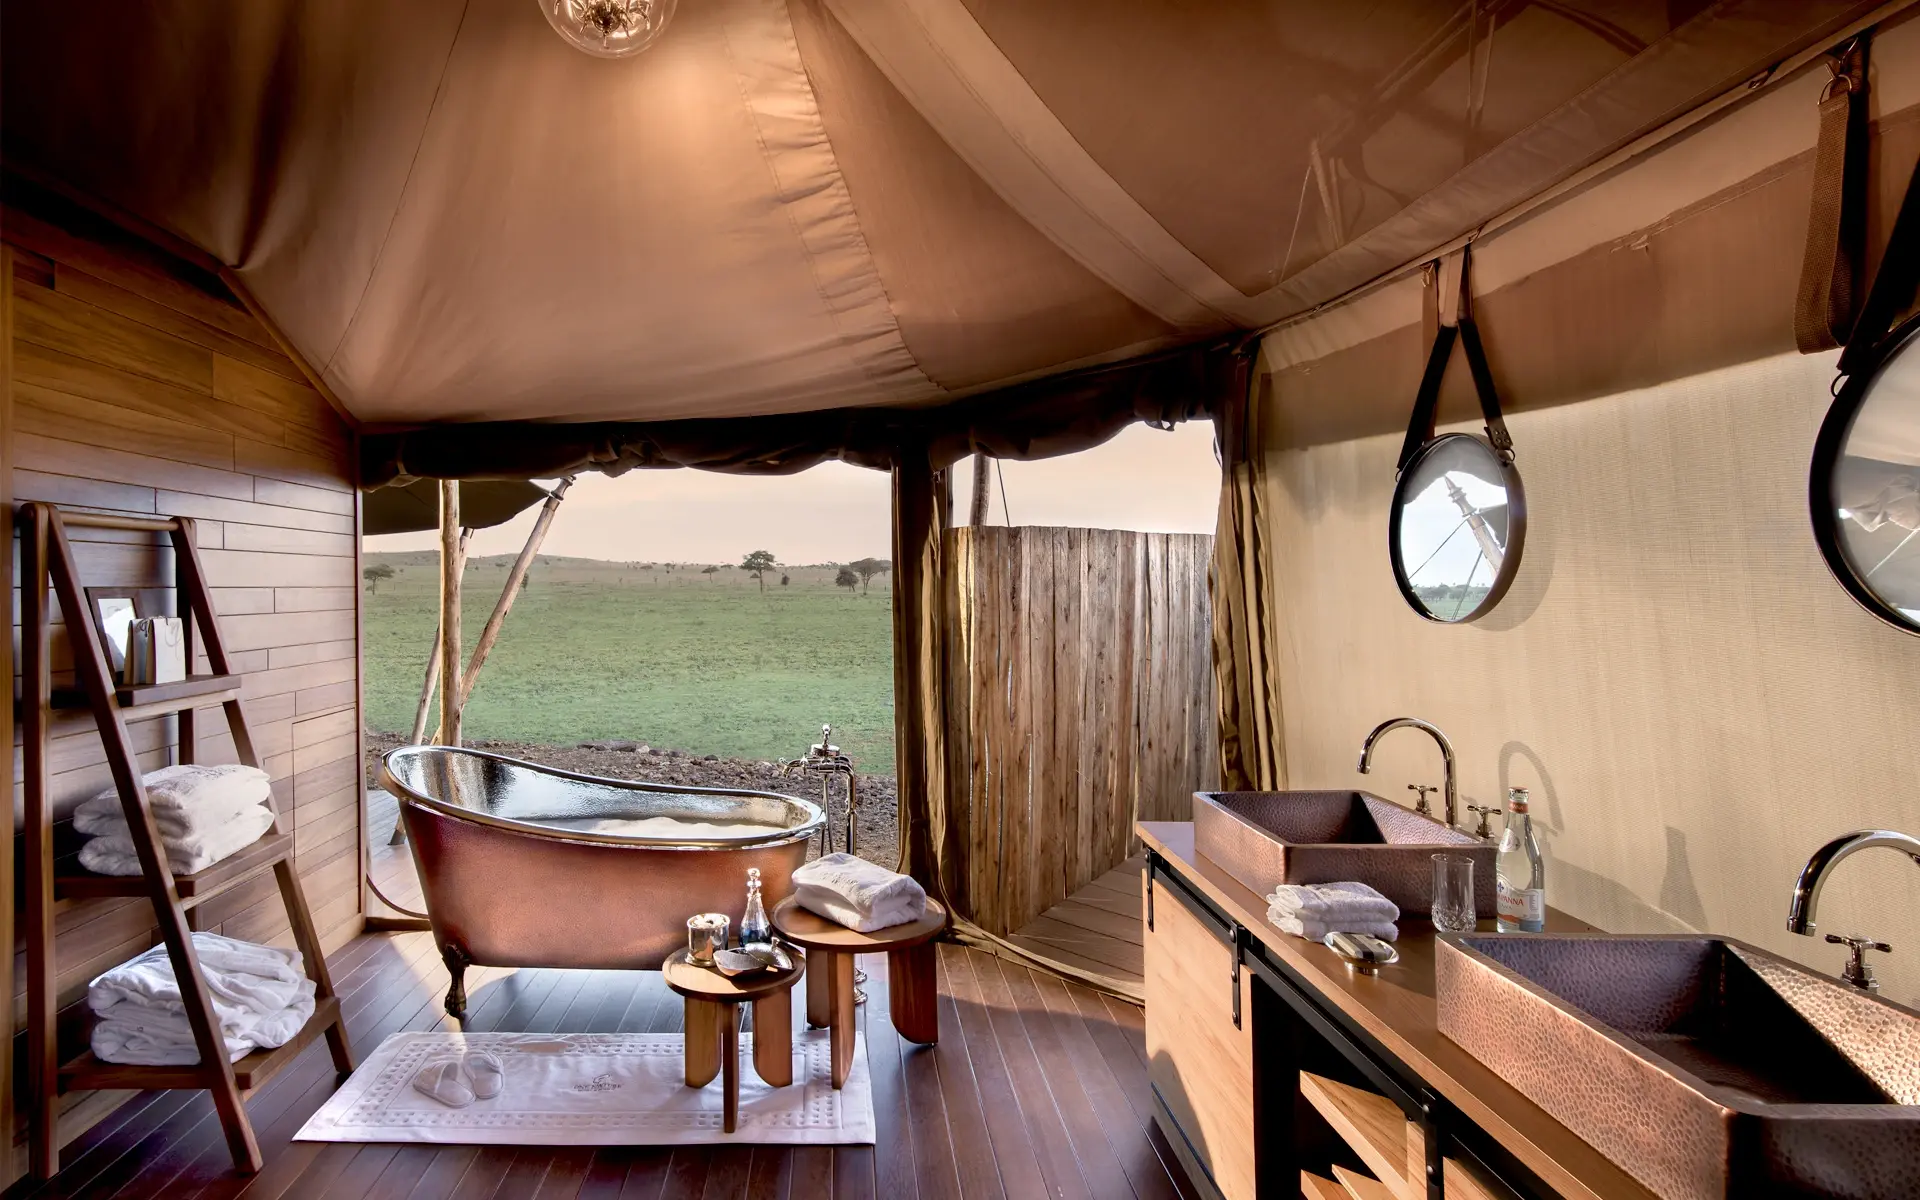 Luxury family bathroom with an African savannah view